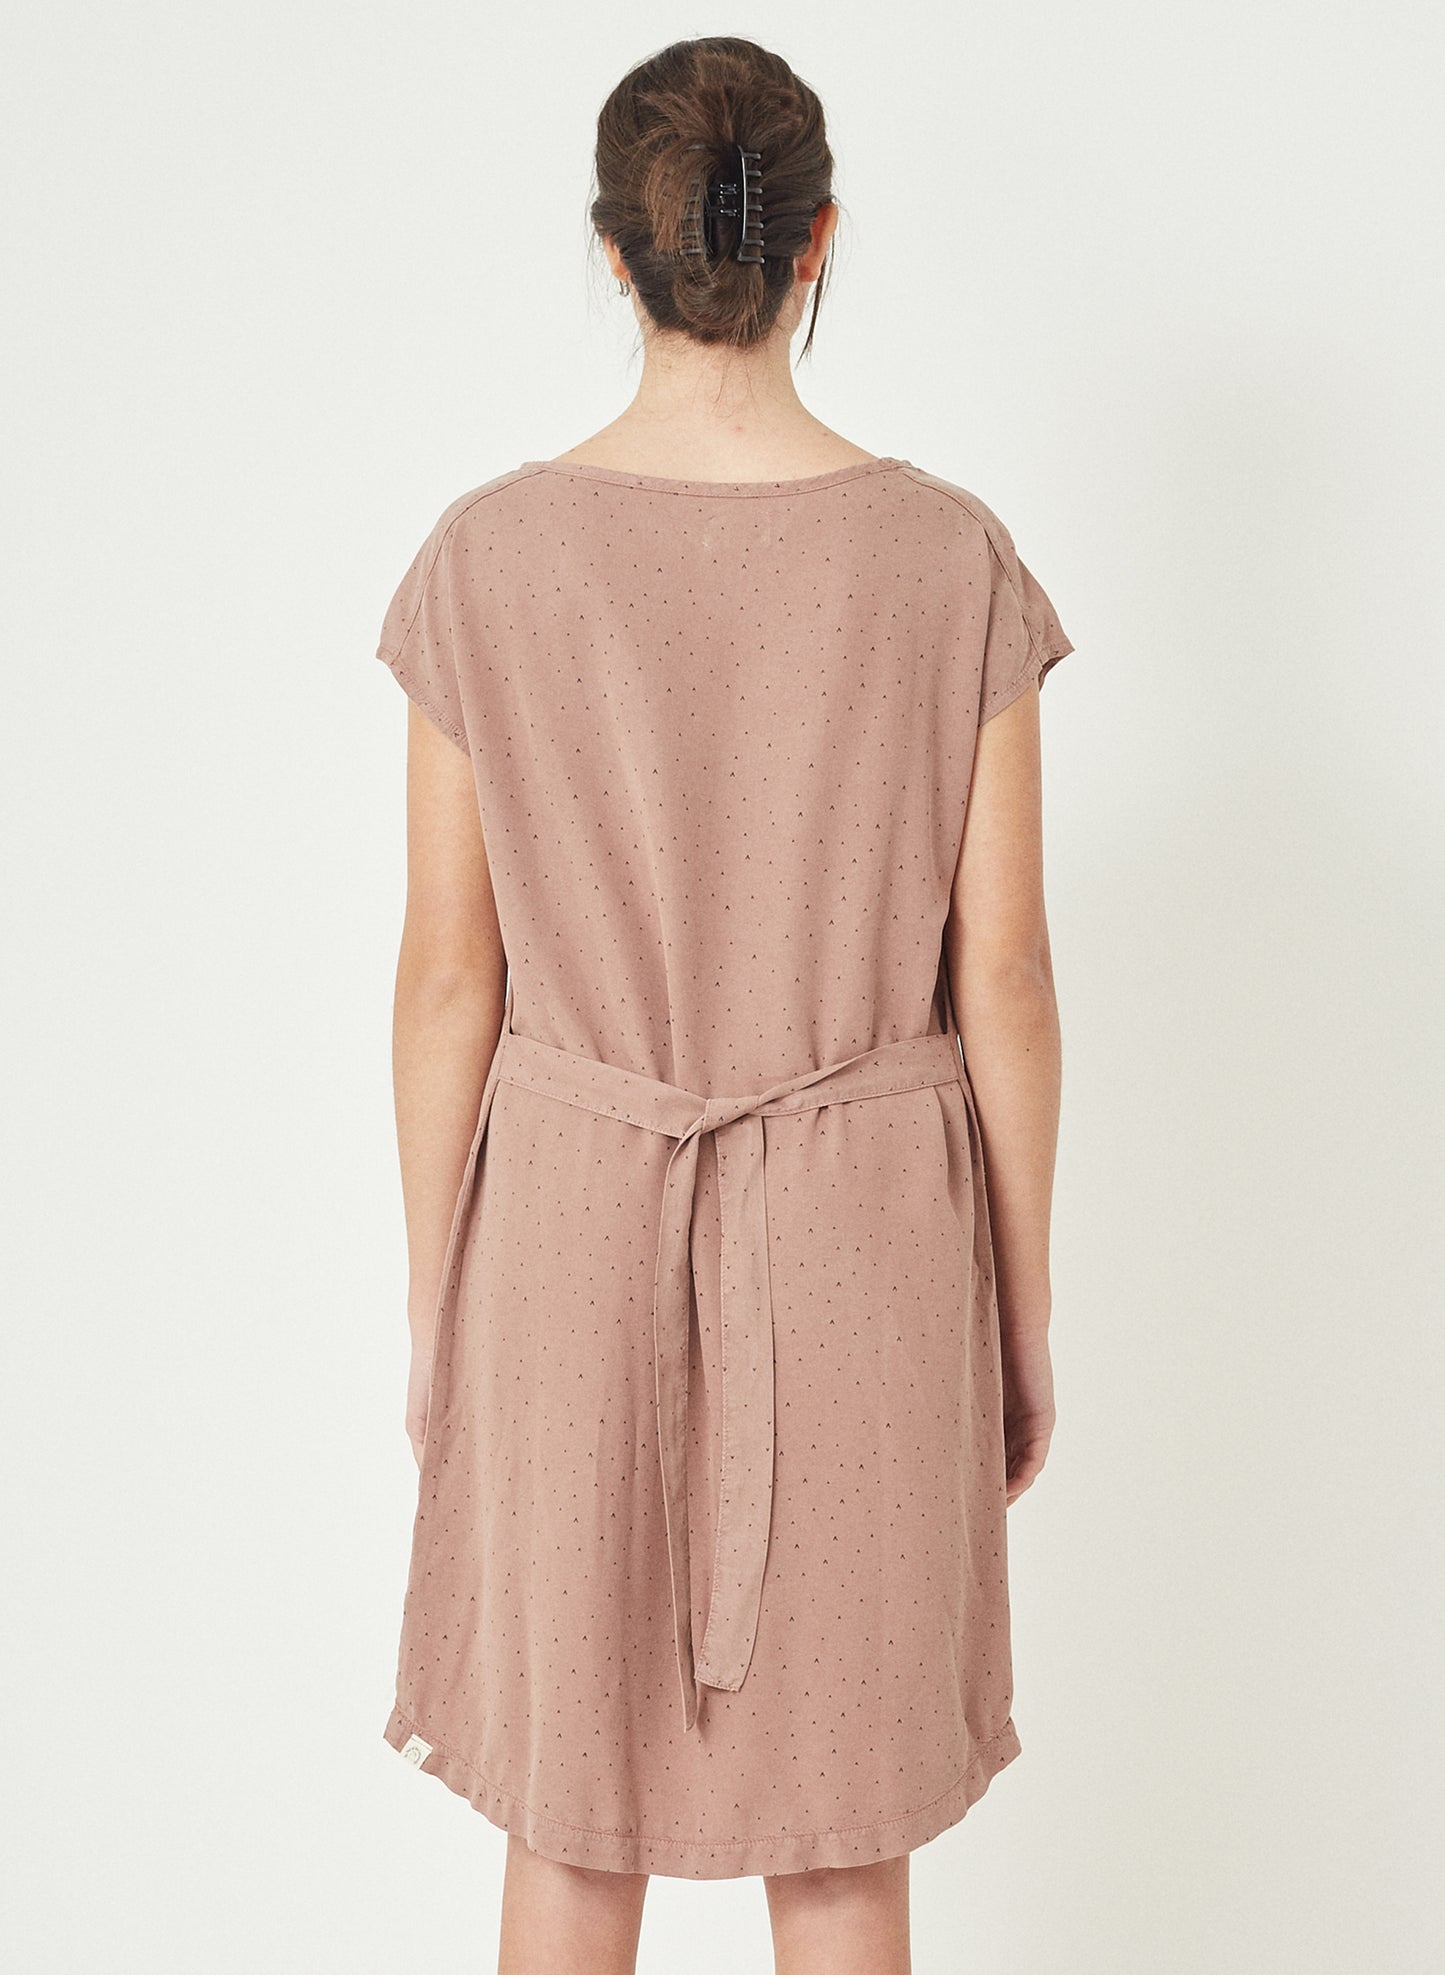 DINA - Long Allover Printed Tencel™ Dress - Dusty Mauve